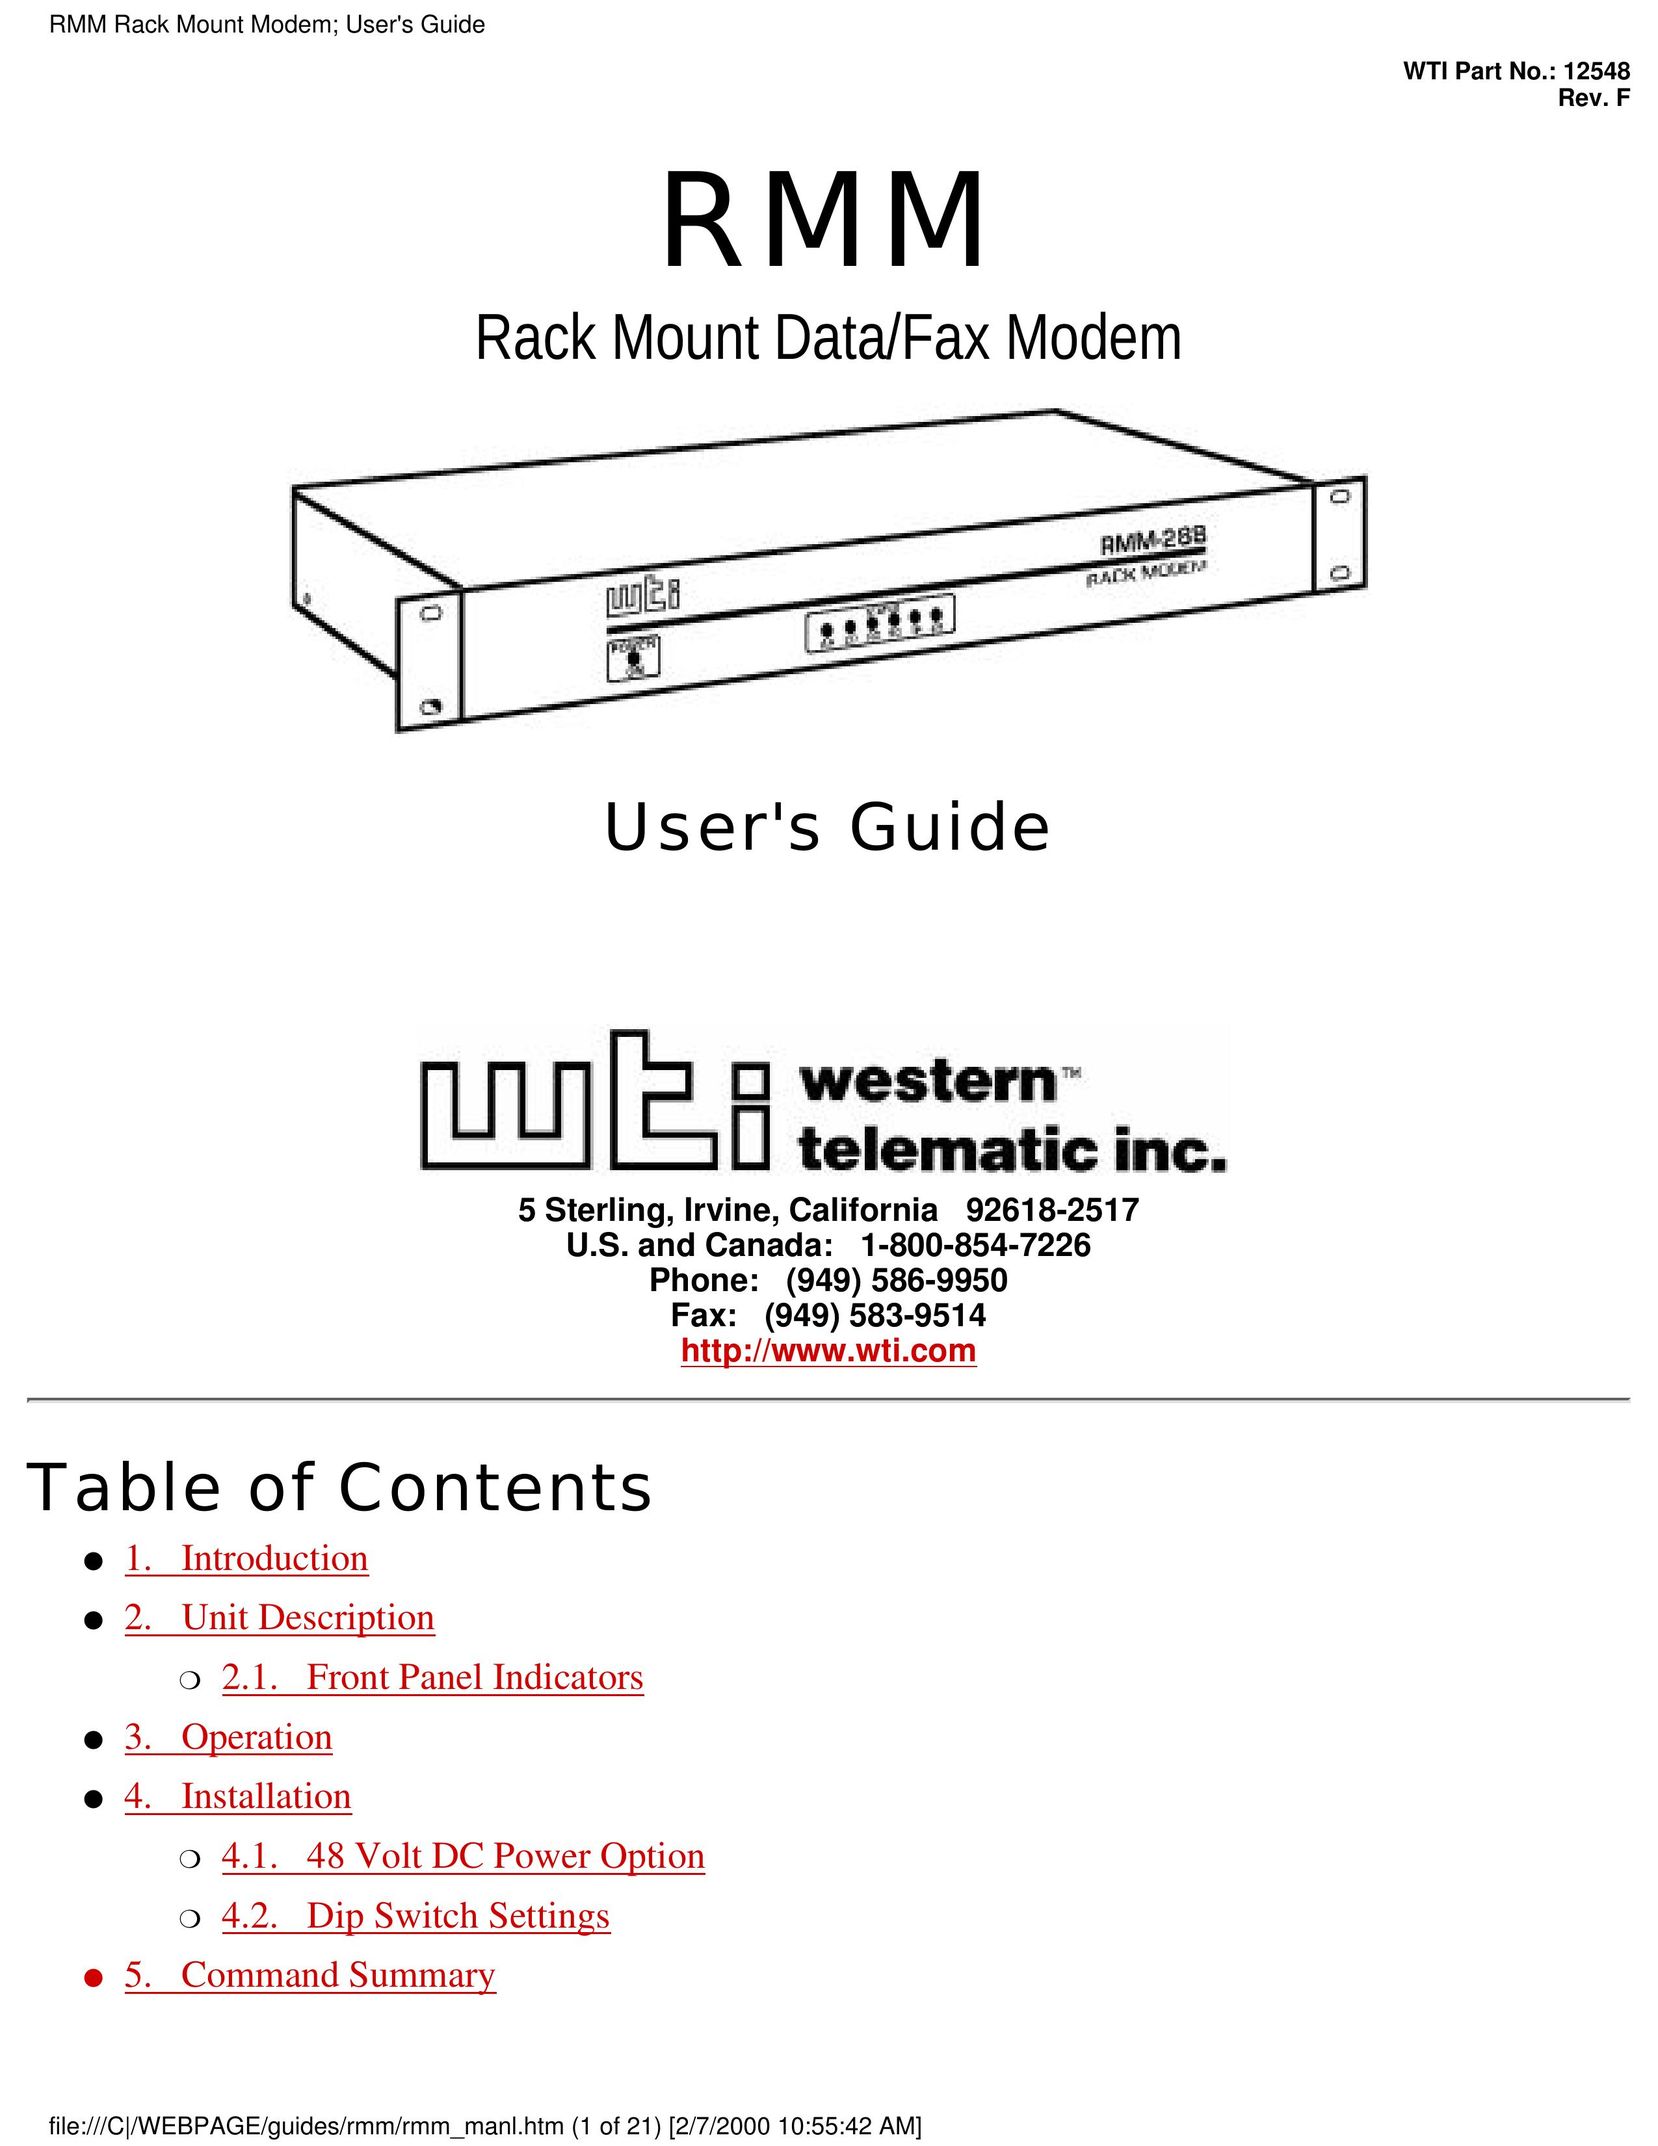 Western Telematic RMM-288 Network Card User Manual